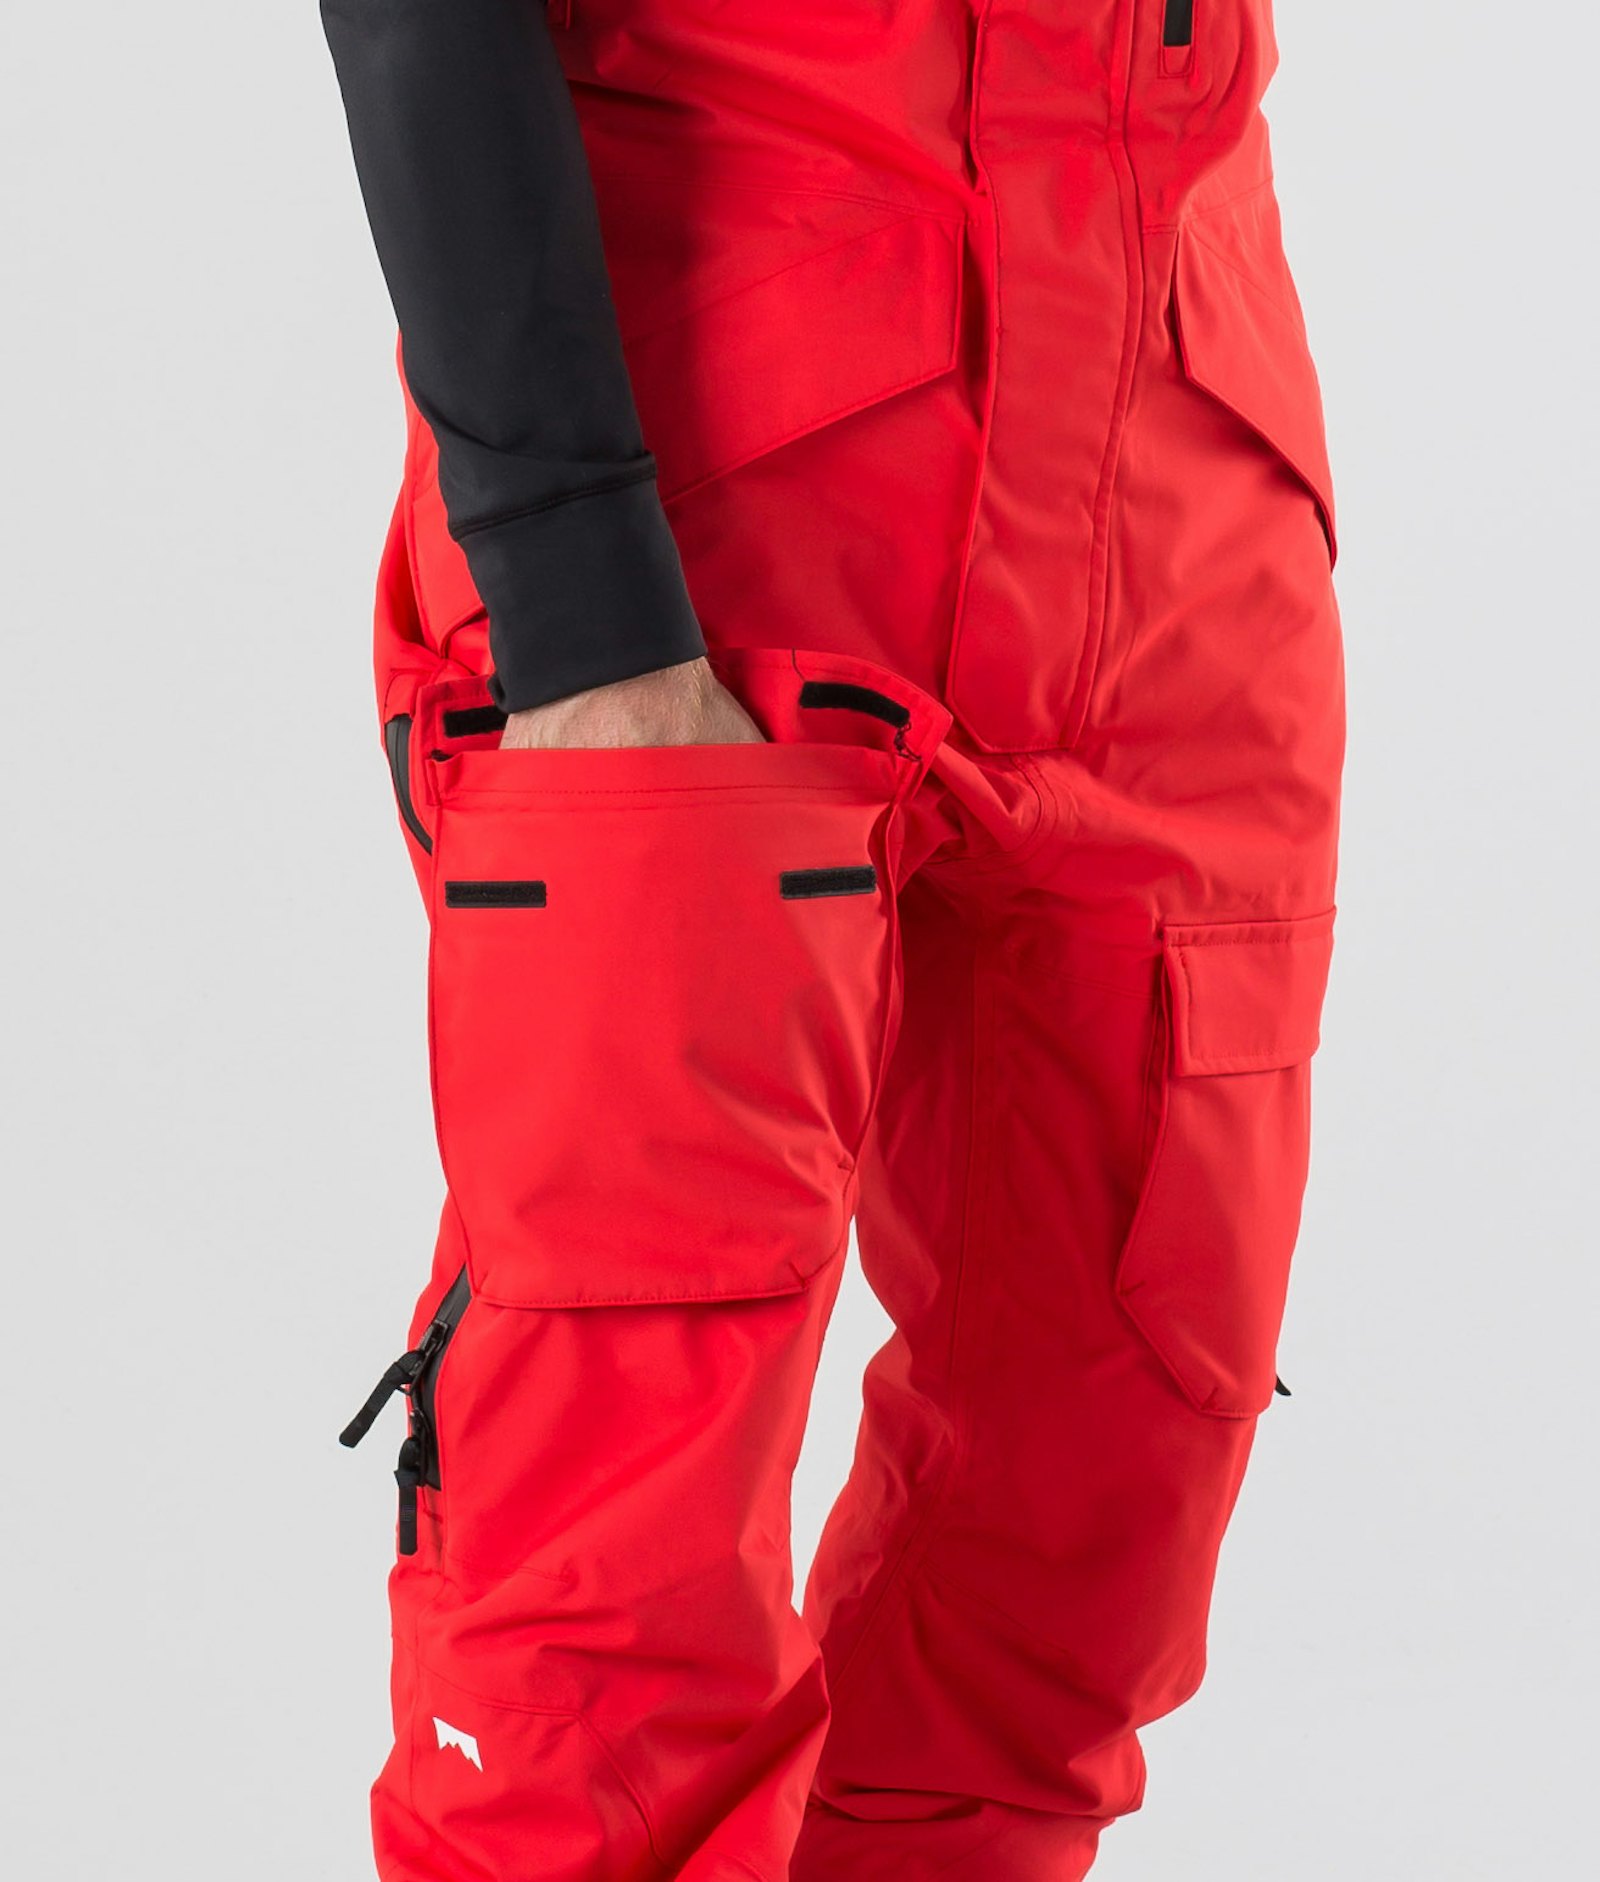 Fawk 2019 Snowboard Pants Men Red Renewed, Image 5 of 11